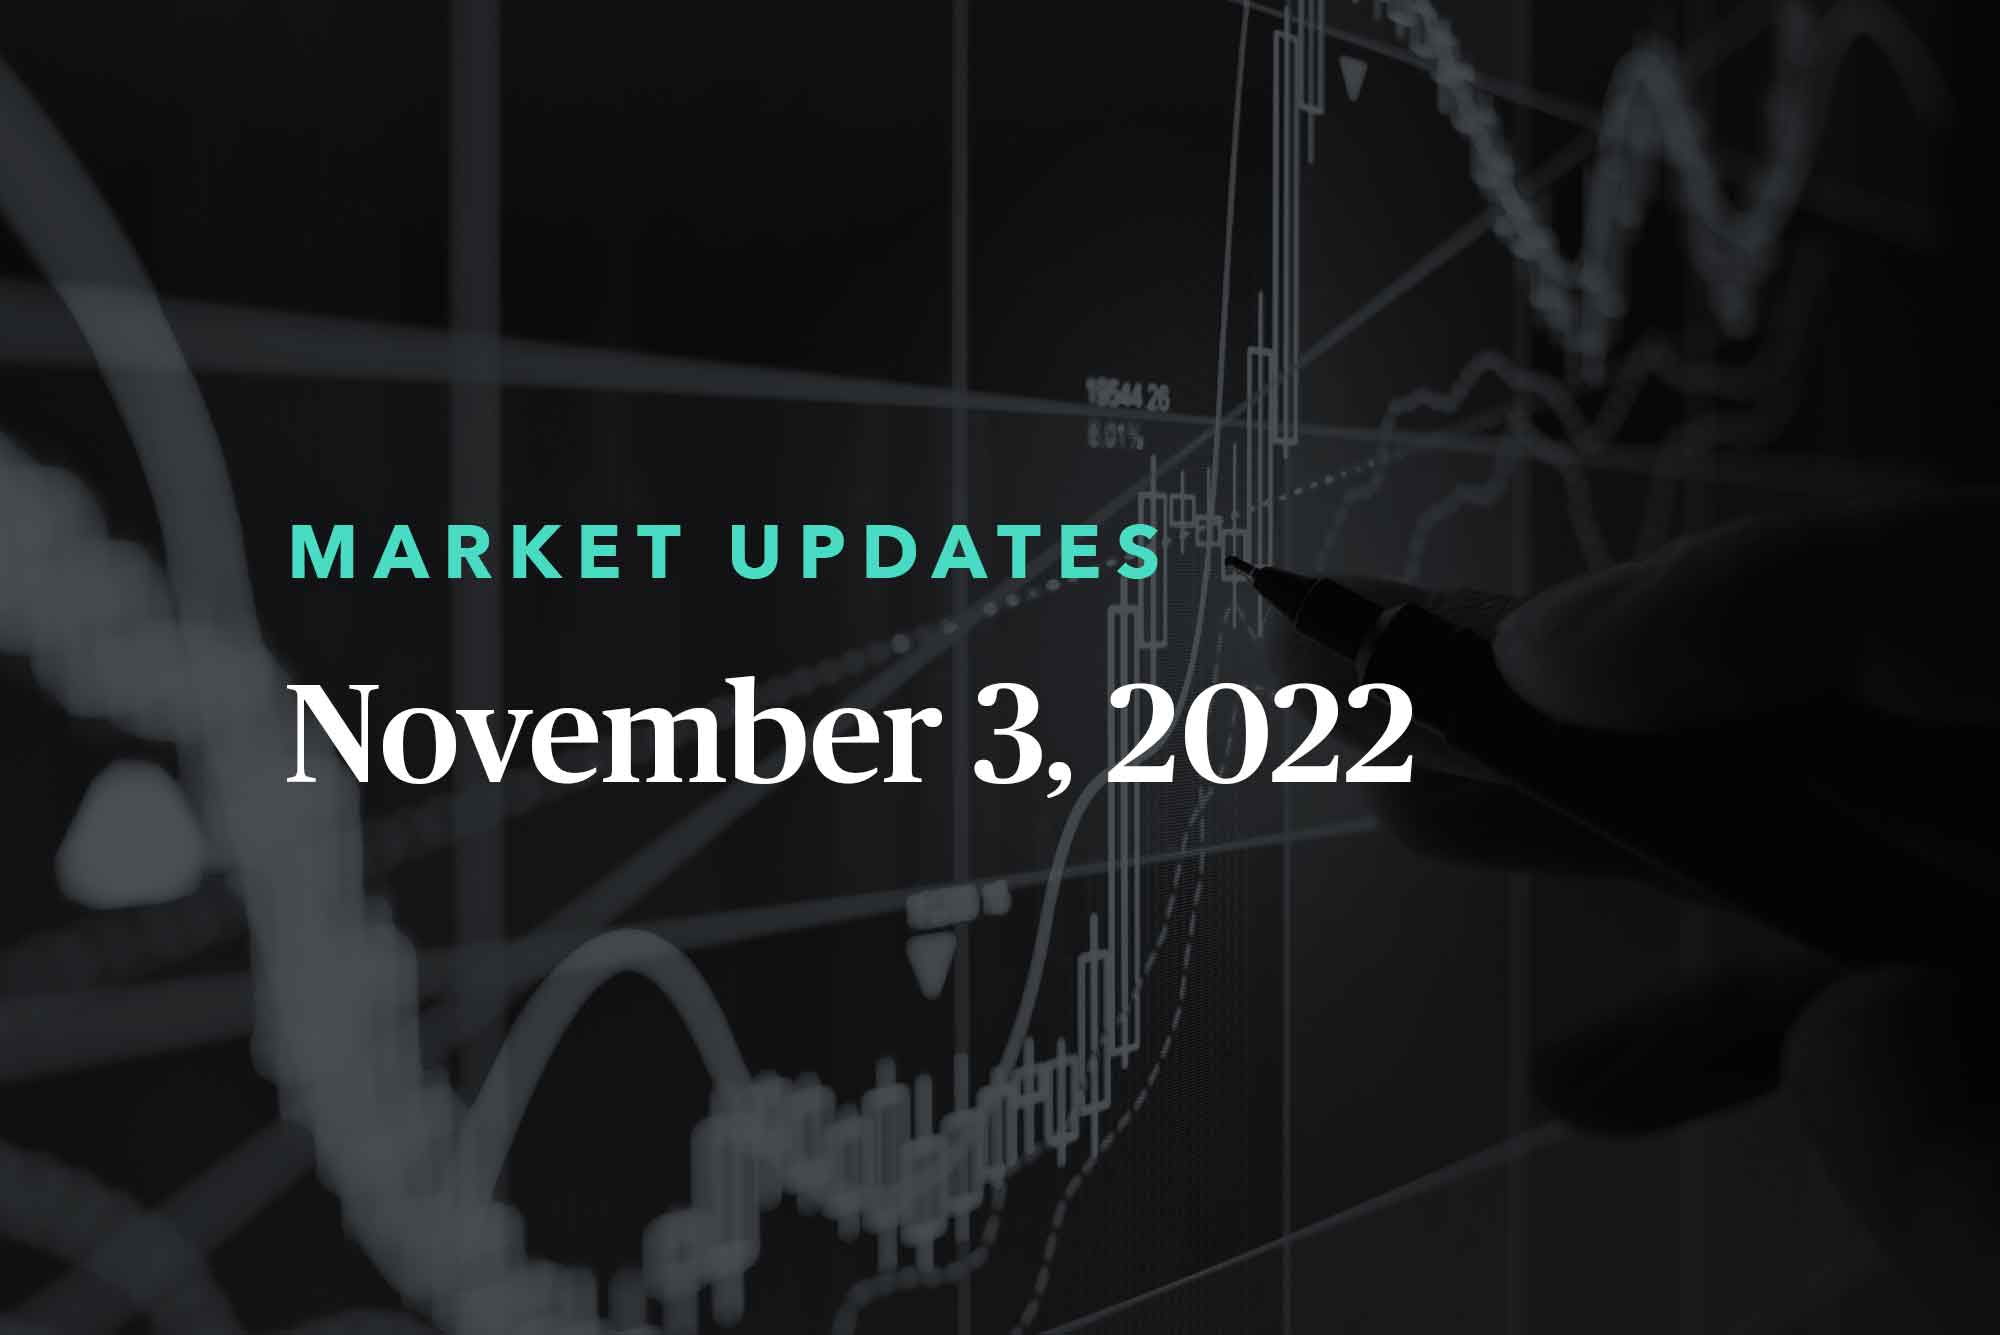 November 3, 2022 Market Update